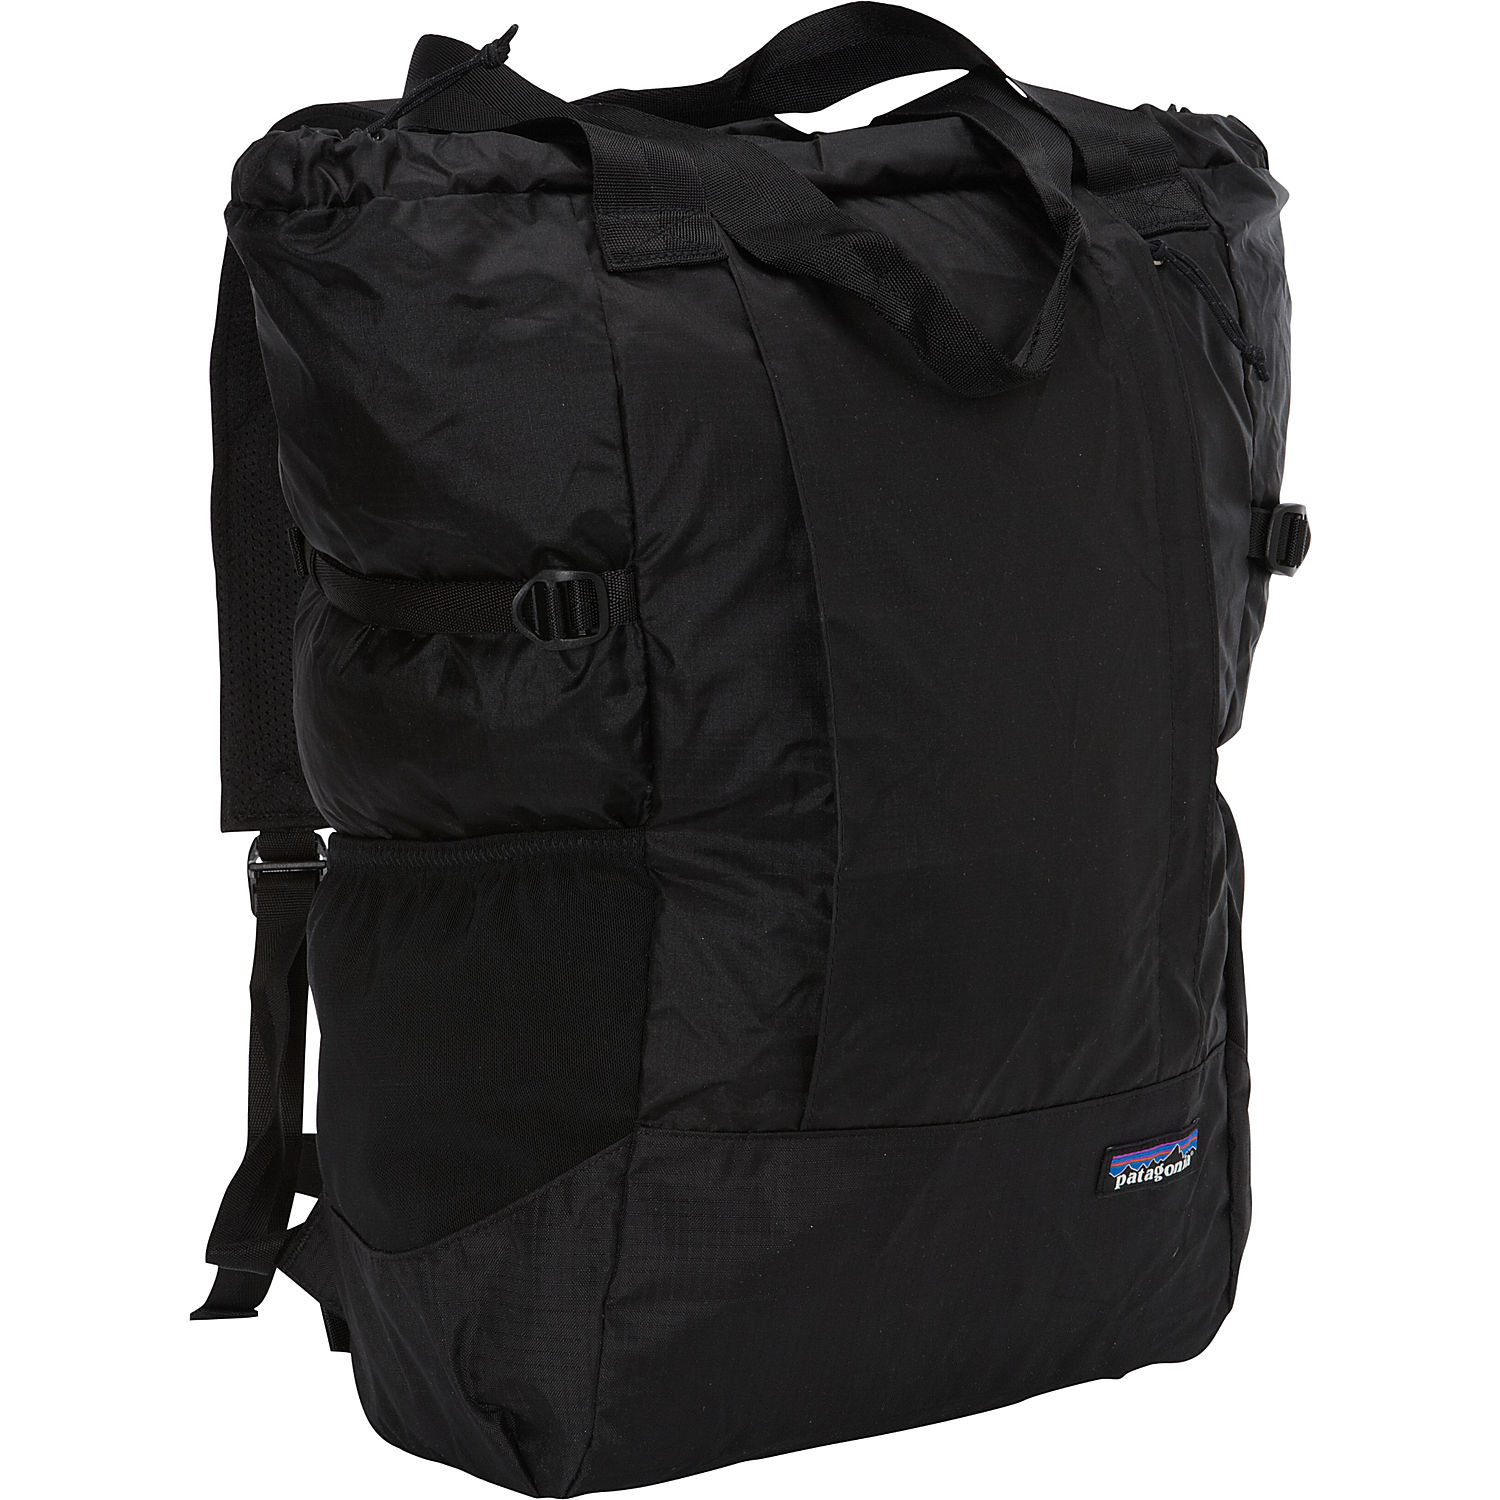 Patagonia Backpack Tote. Patagonia Sport, Black, 39,3 cm x 26 cm x 20,3 cm.